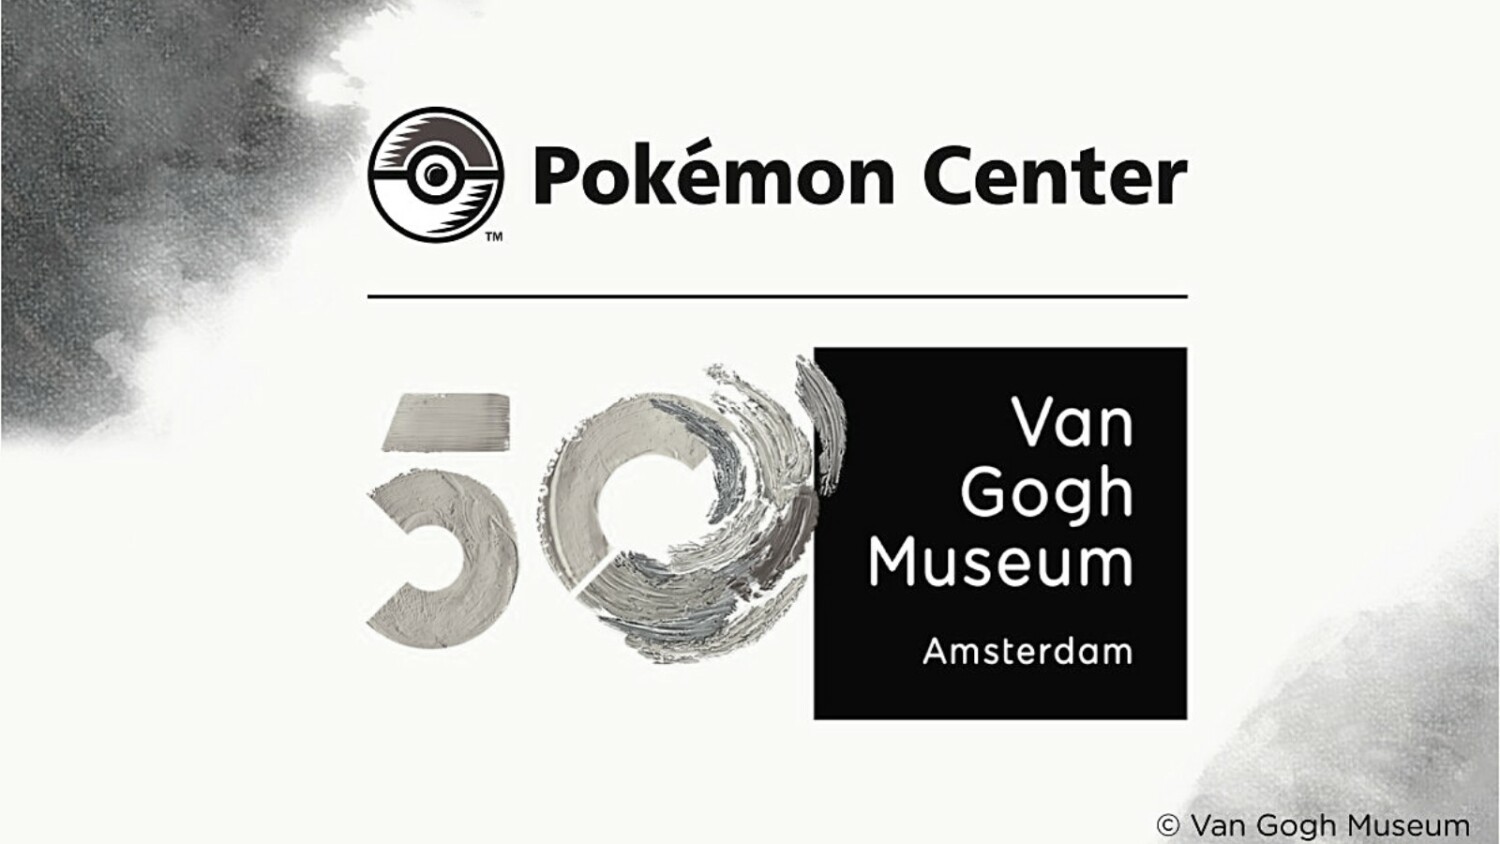 Pokemon TCG Collectors Preparing For Van Gogh Museum Promo Cards